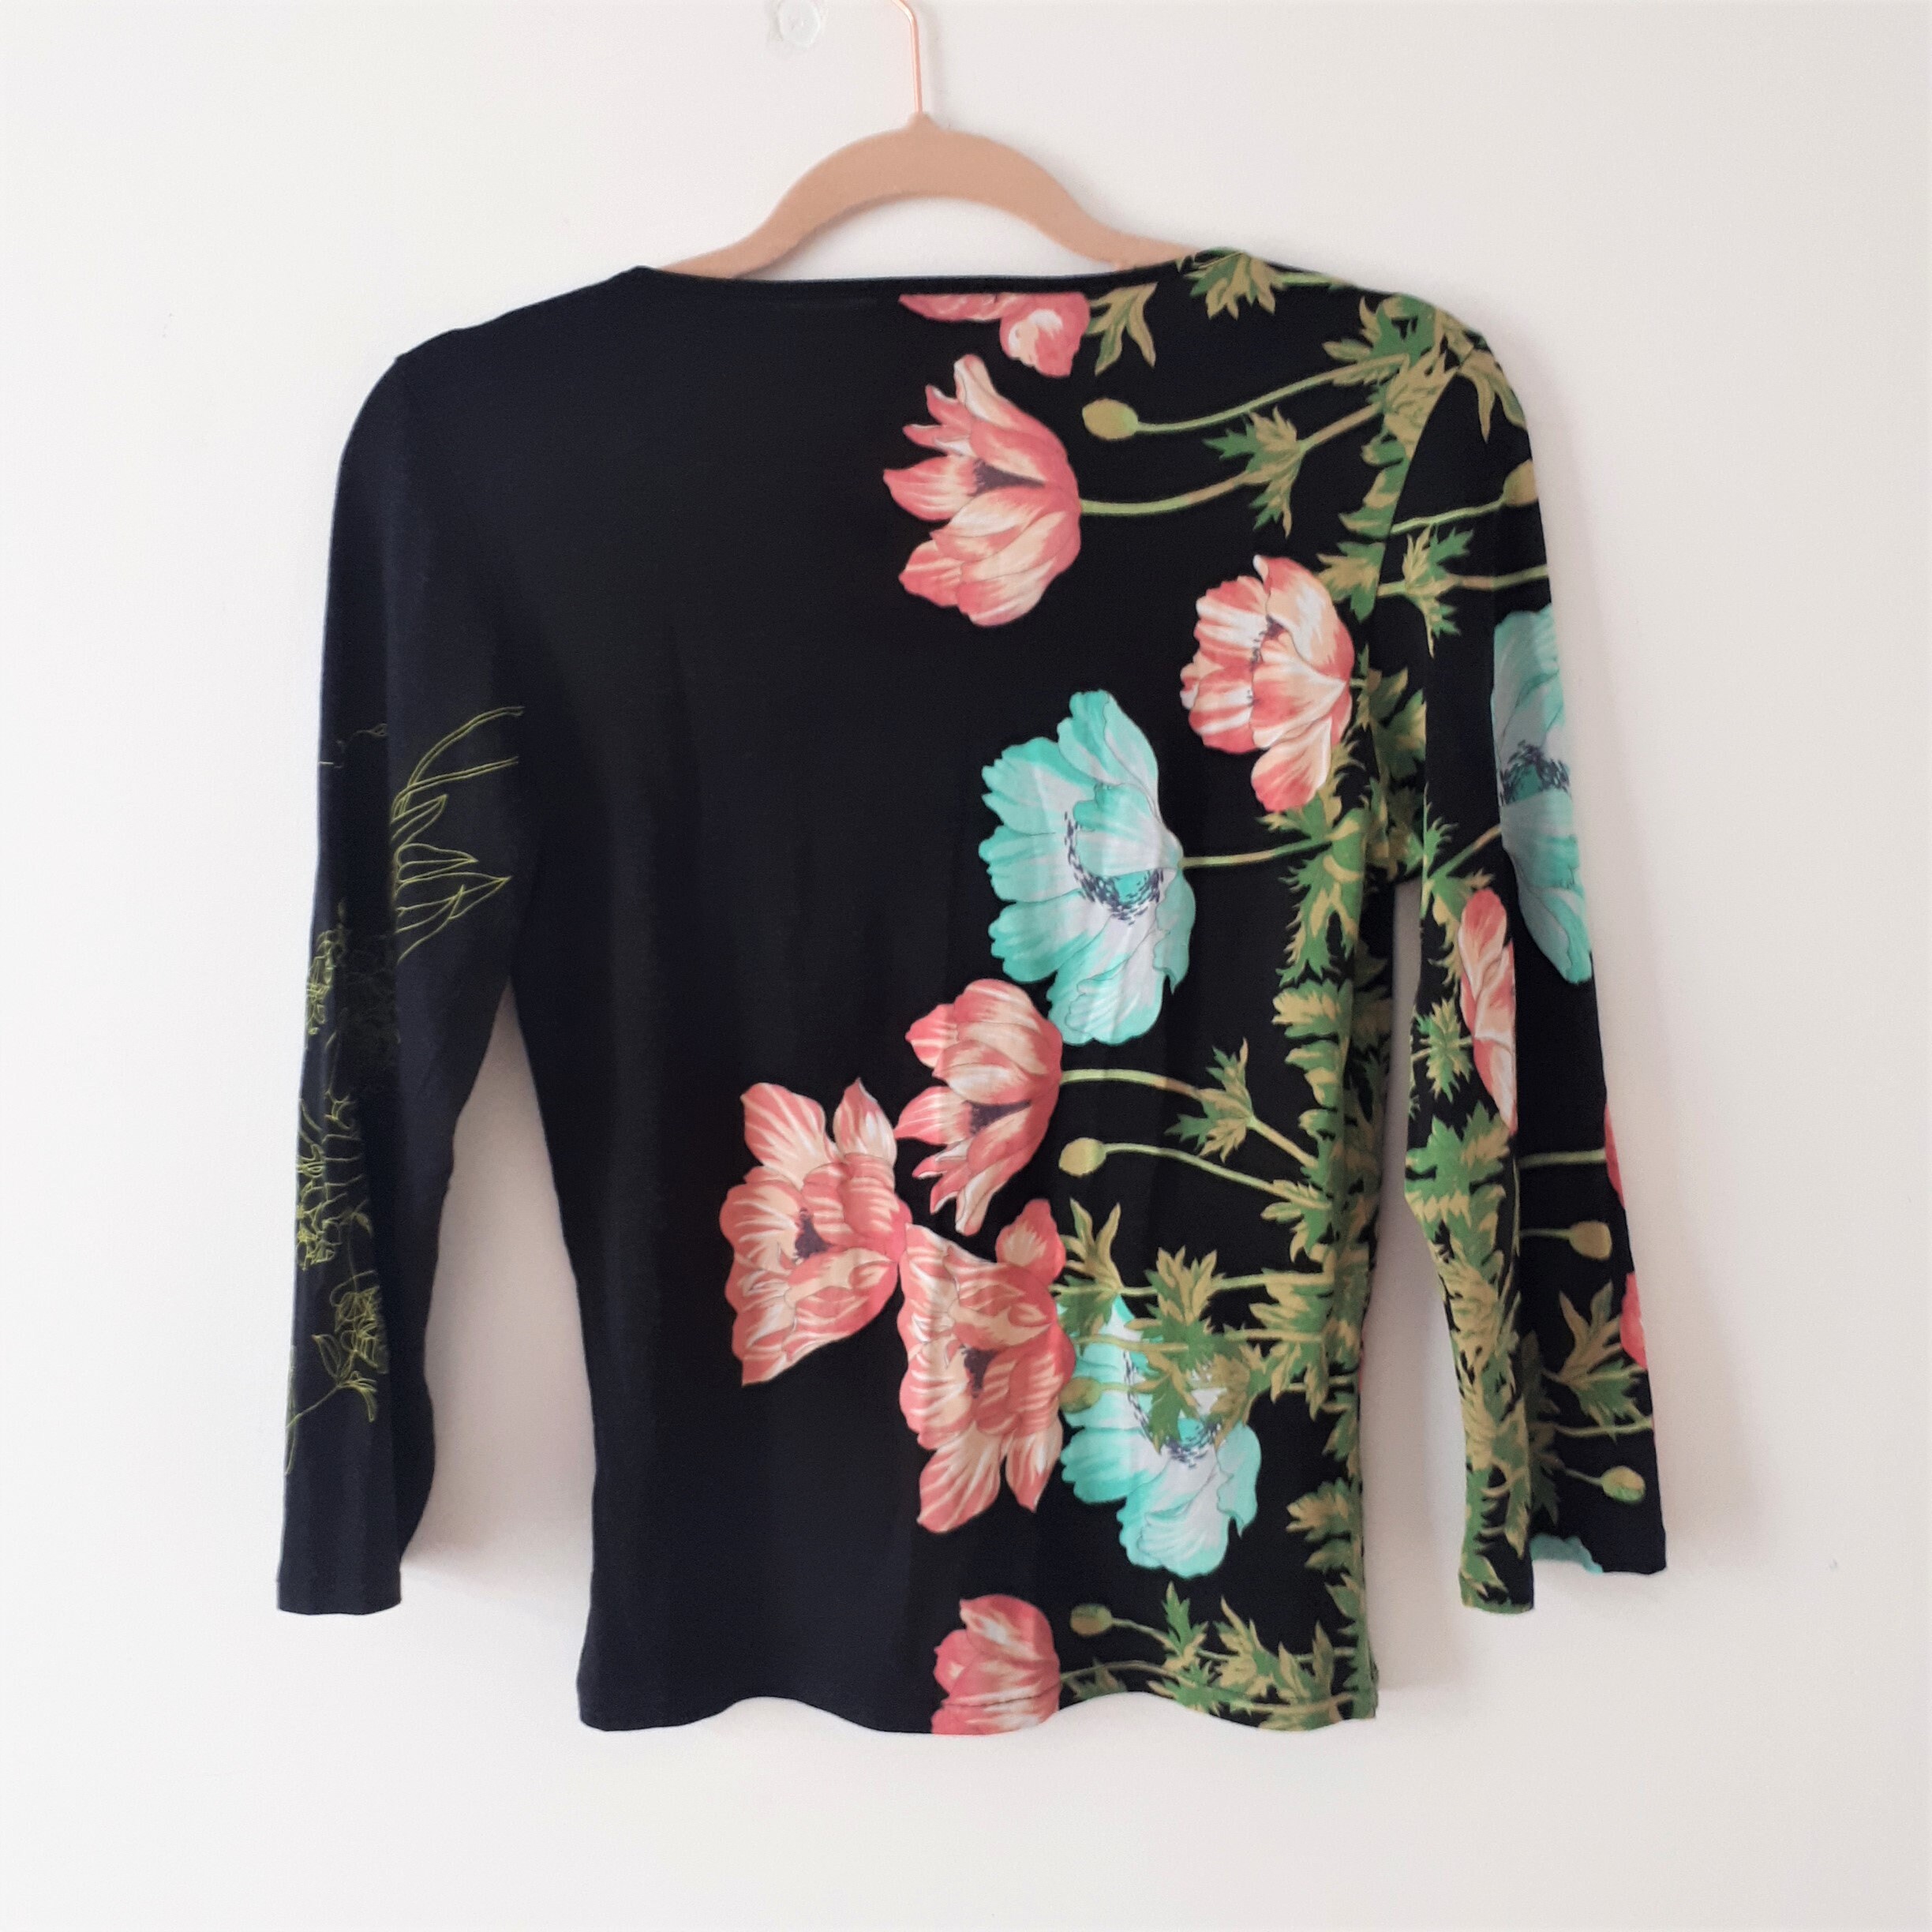 Vintage Kenzo Jungle 90s floral print jersey blouse top | Etsy